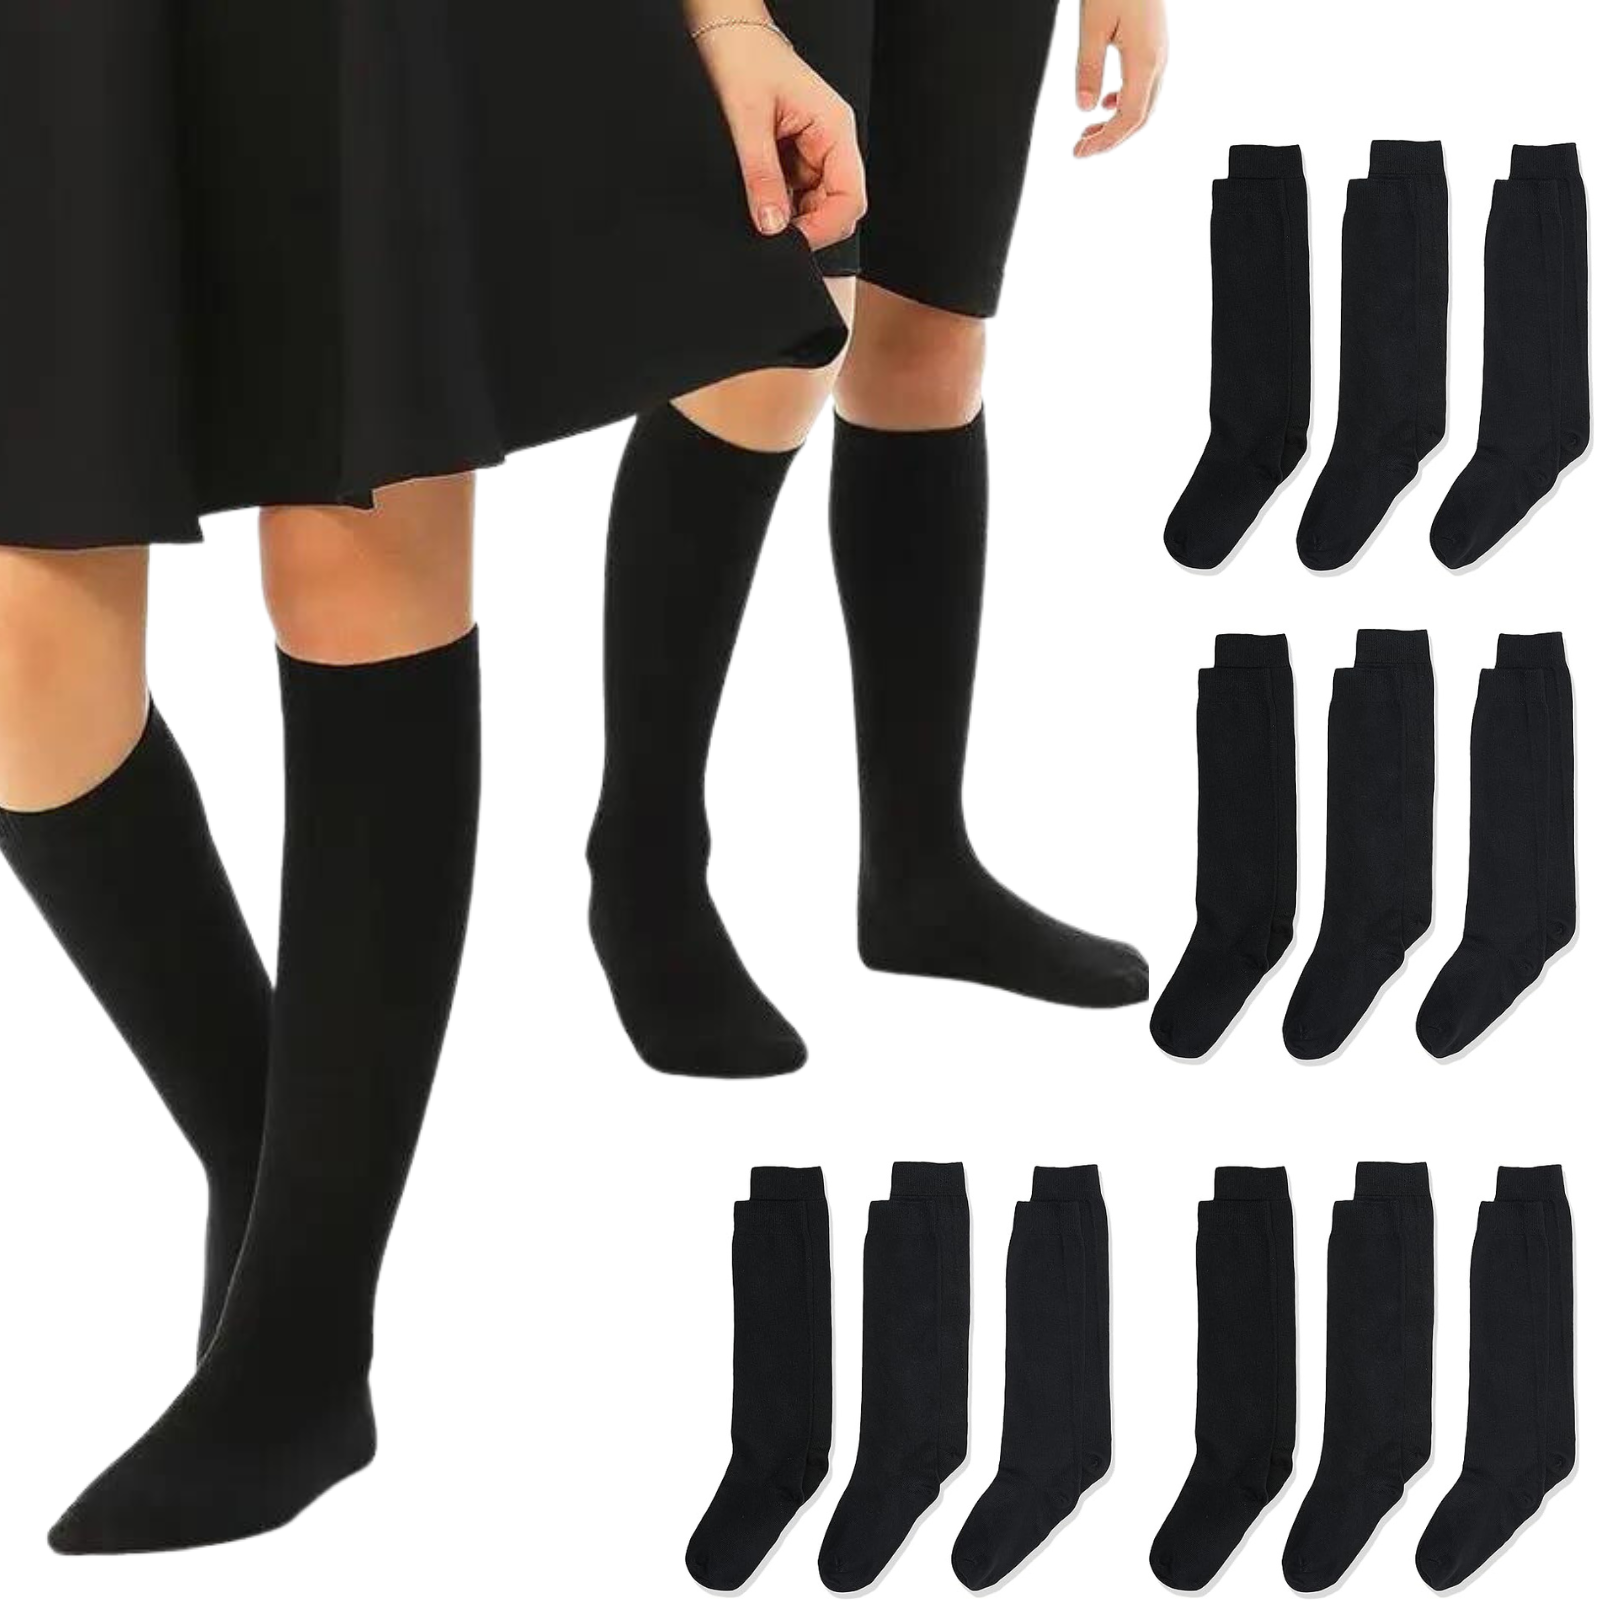 12x Pairs School Uniform Knee High Socks Cotton Rich Girls Boys Kids Bulk - Black - 6-11 (12+ Years Old)